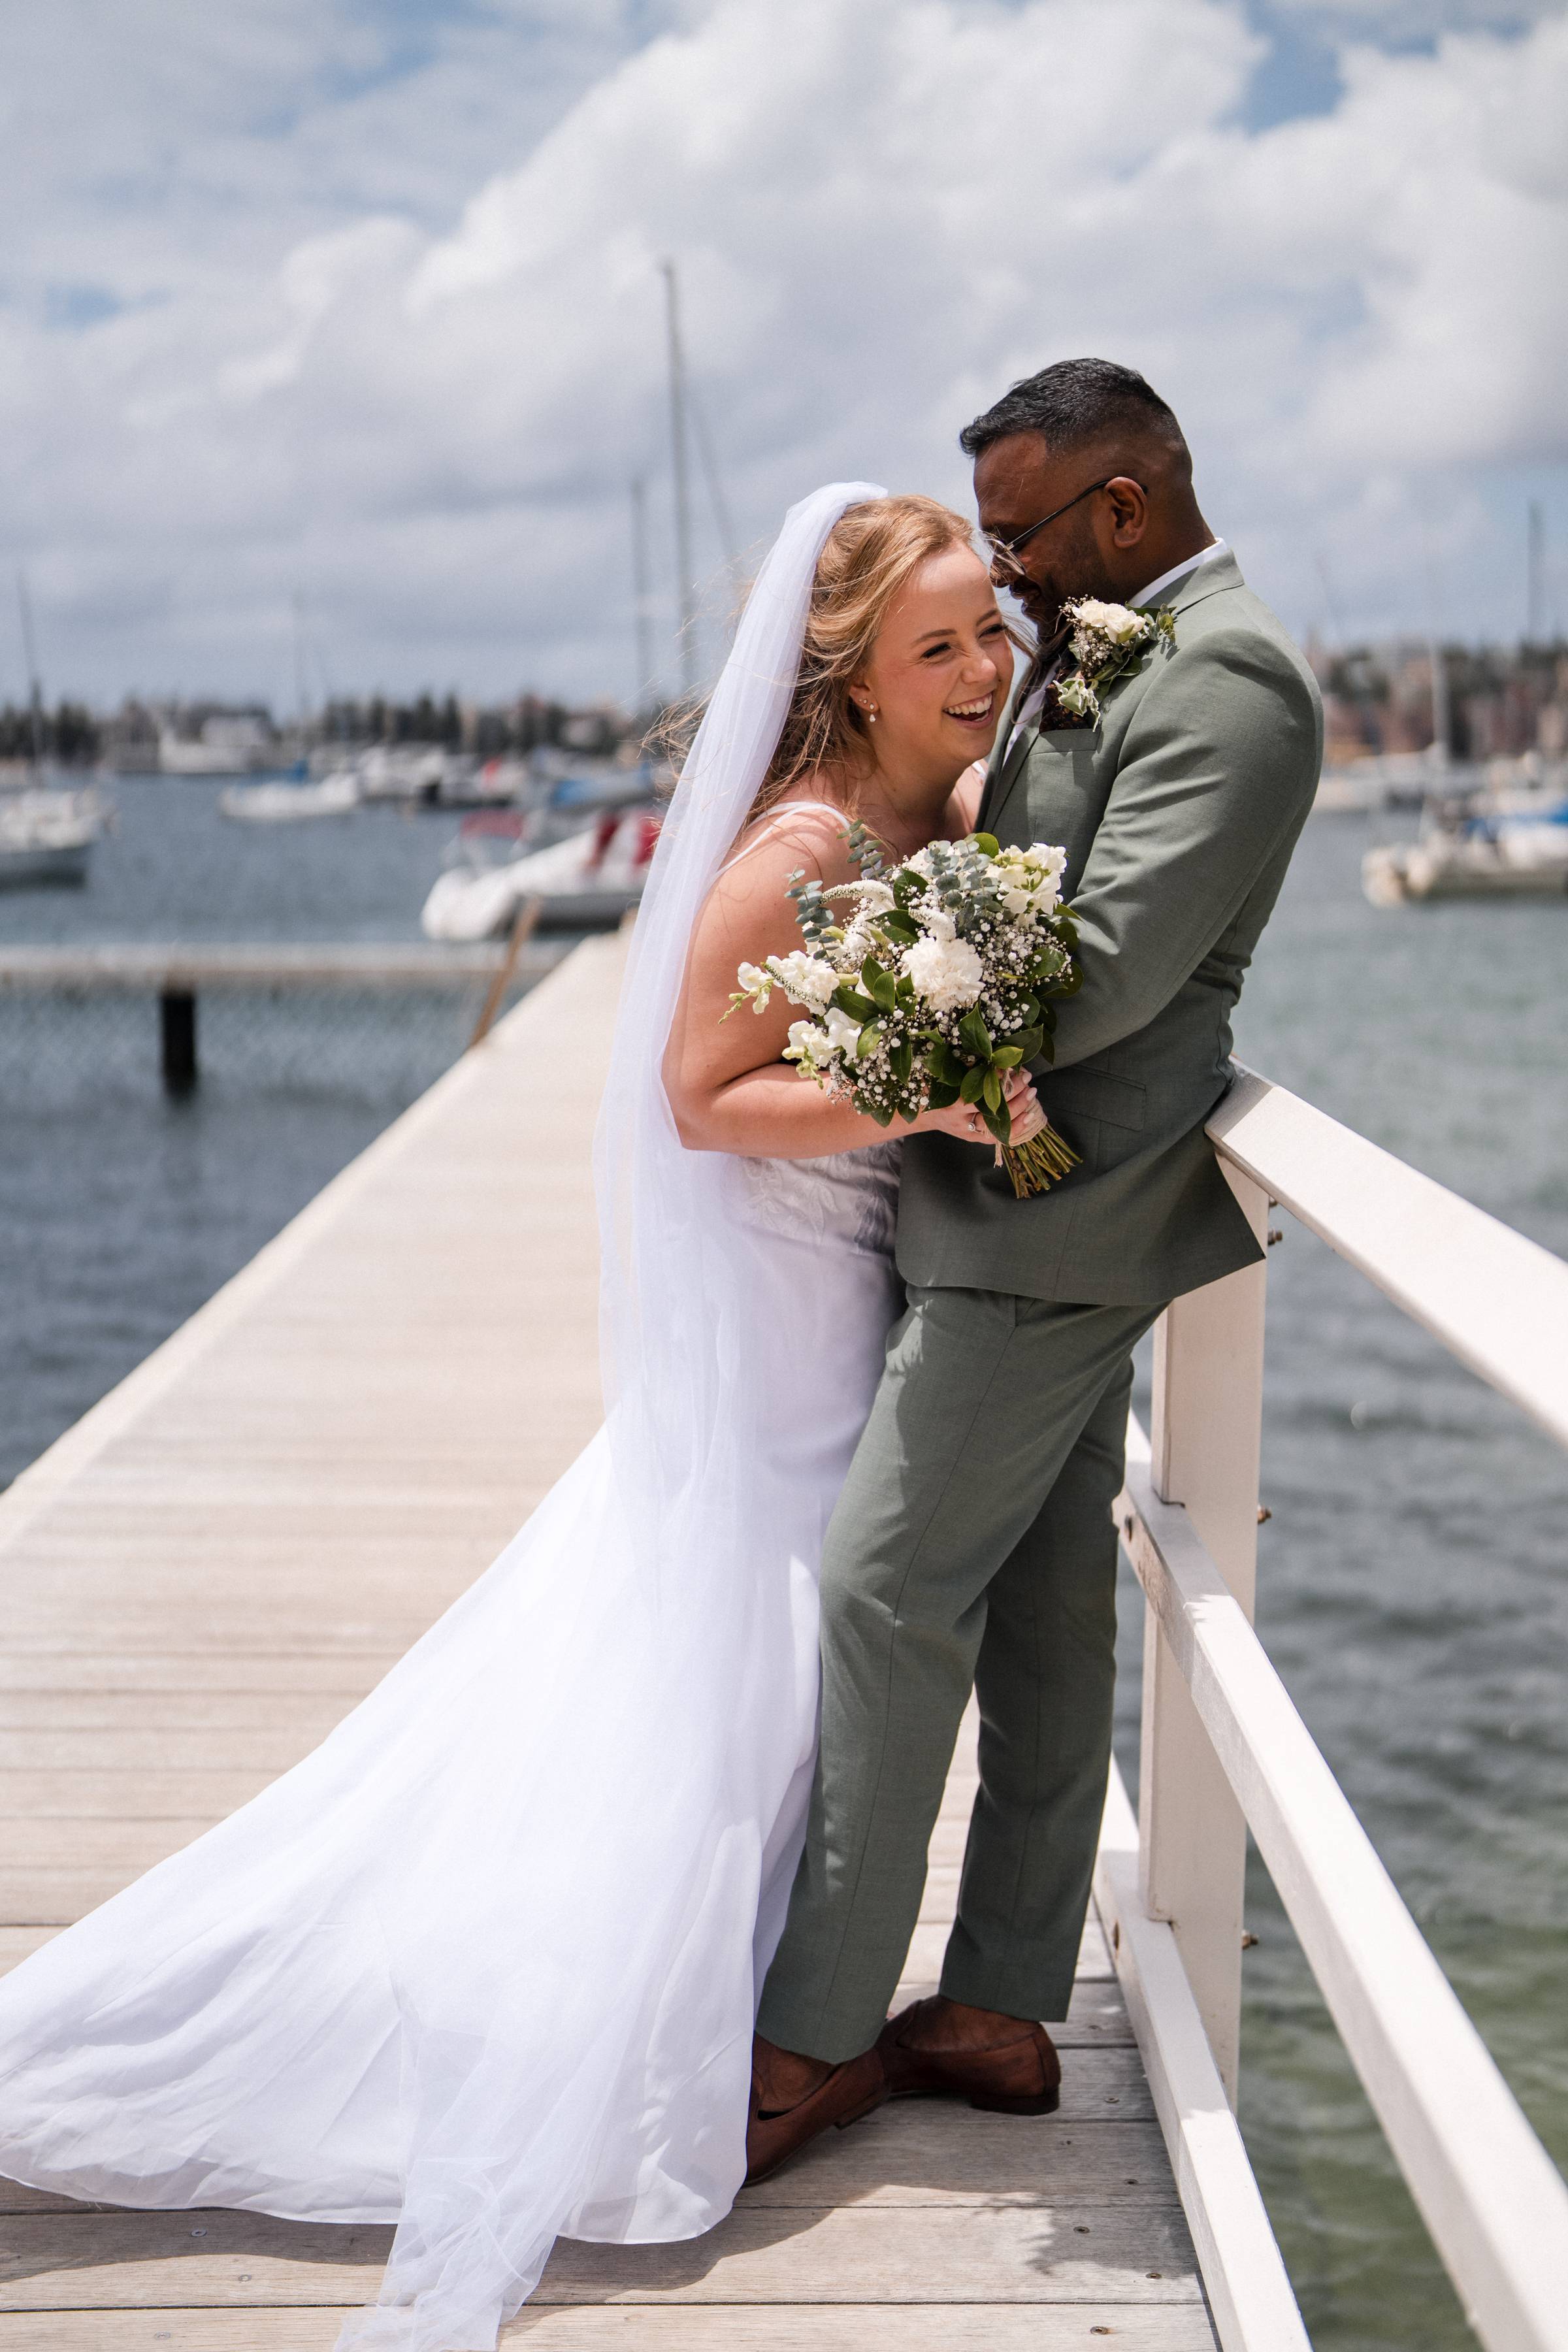 Anne + Lance // The Boathouse Shelly Beach // Sydney Wedding Photography